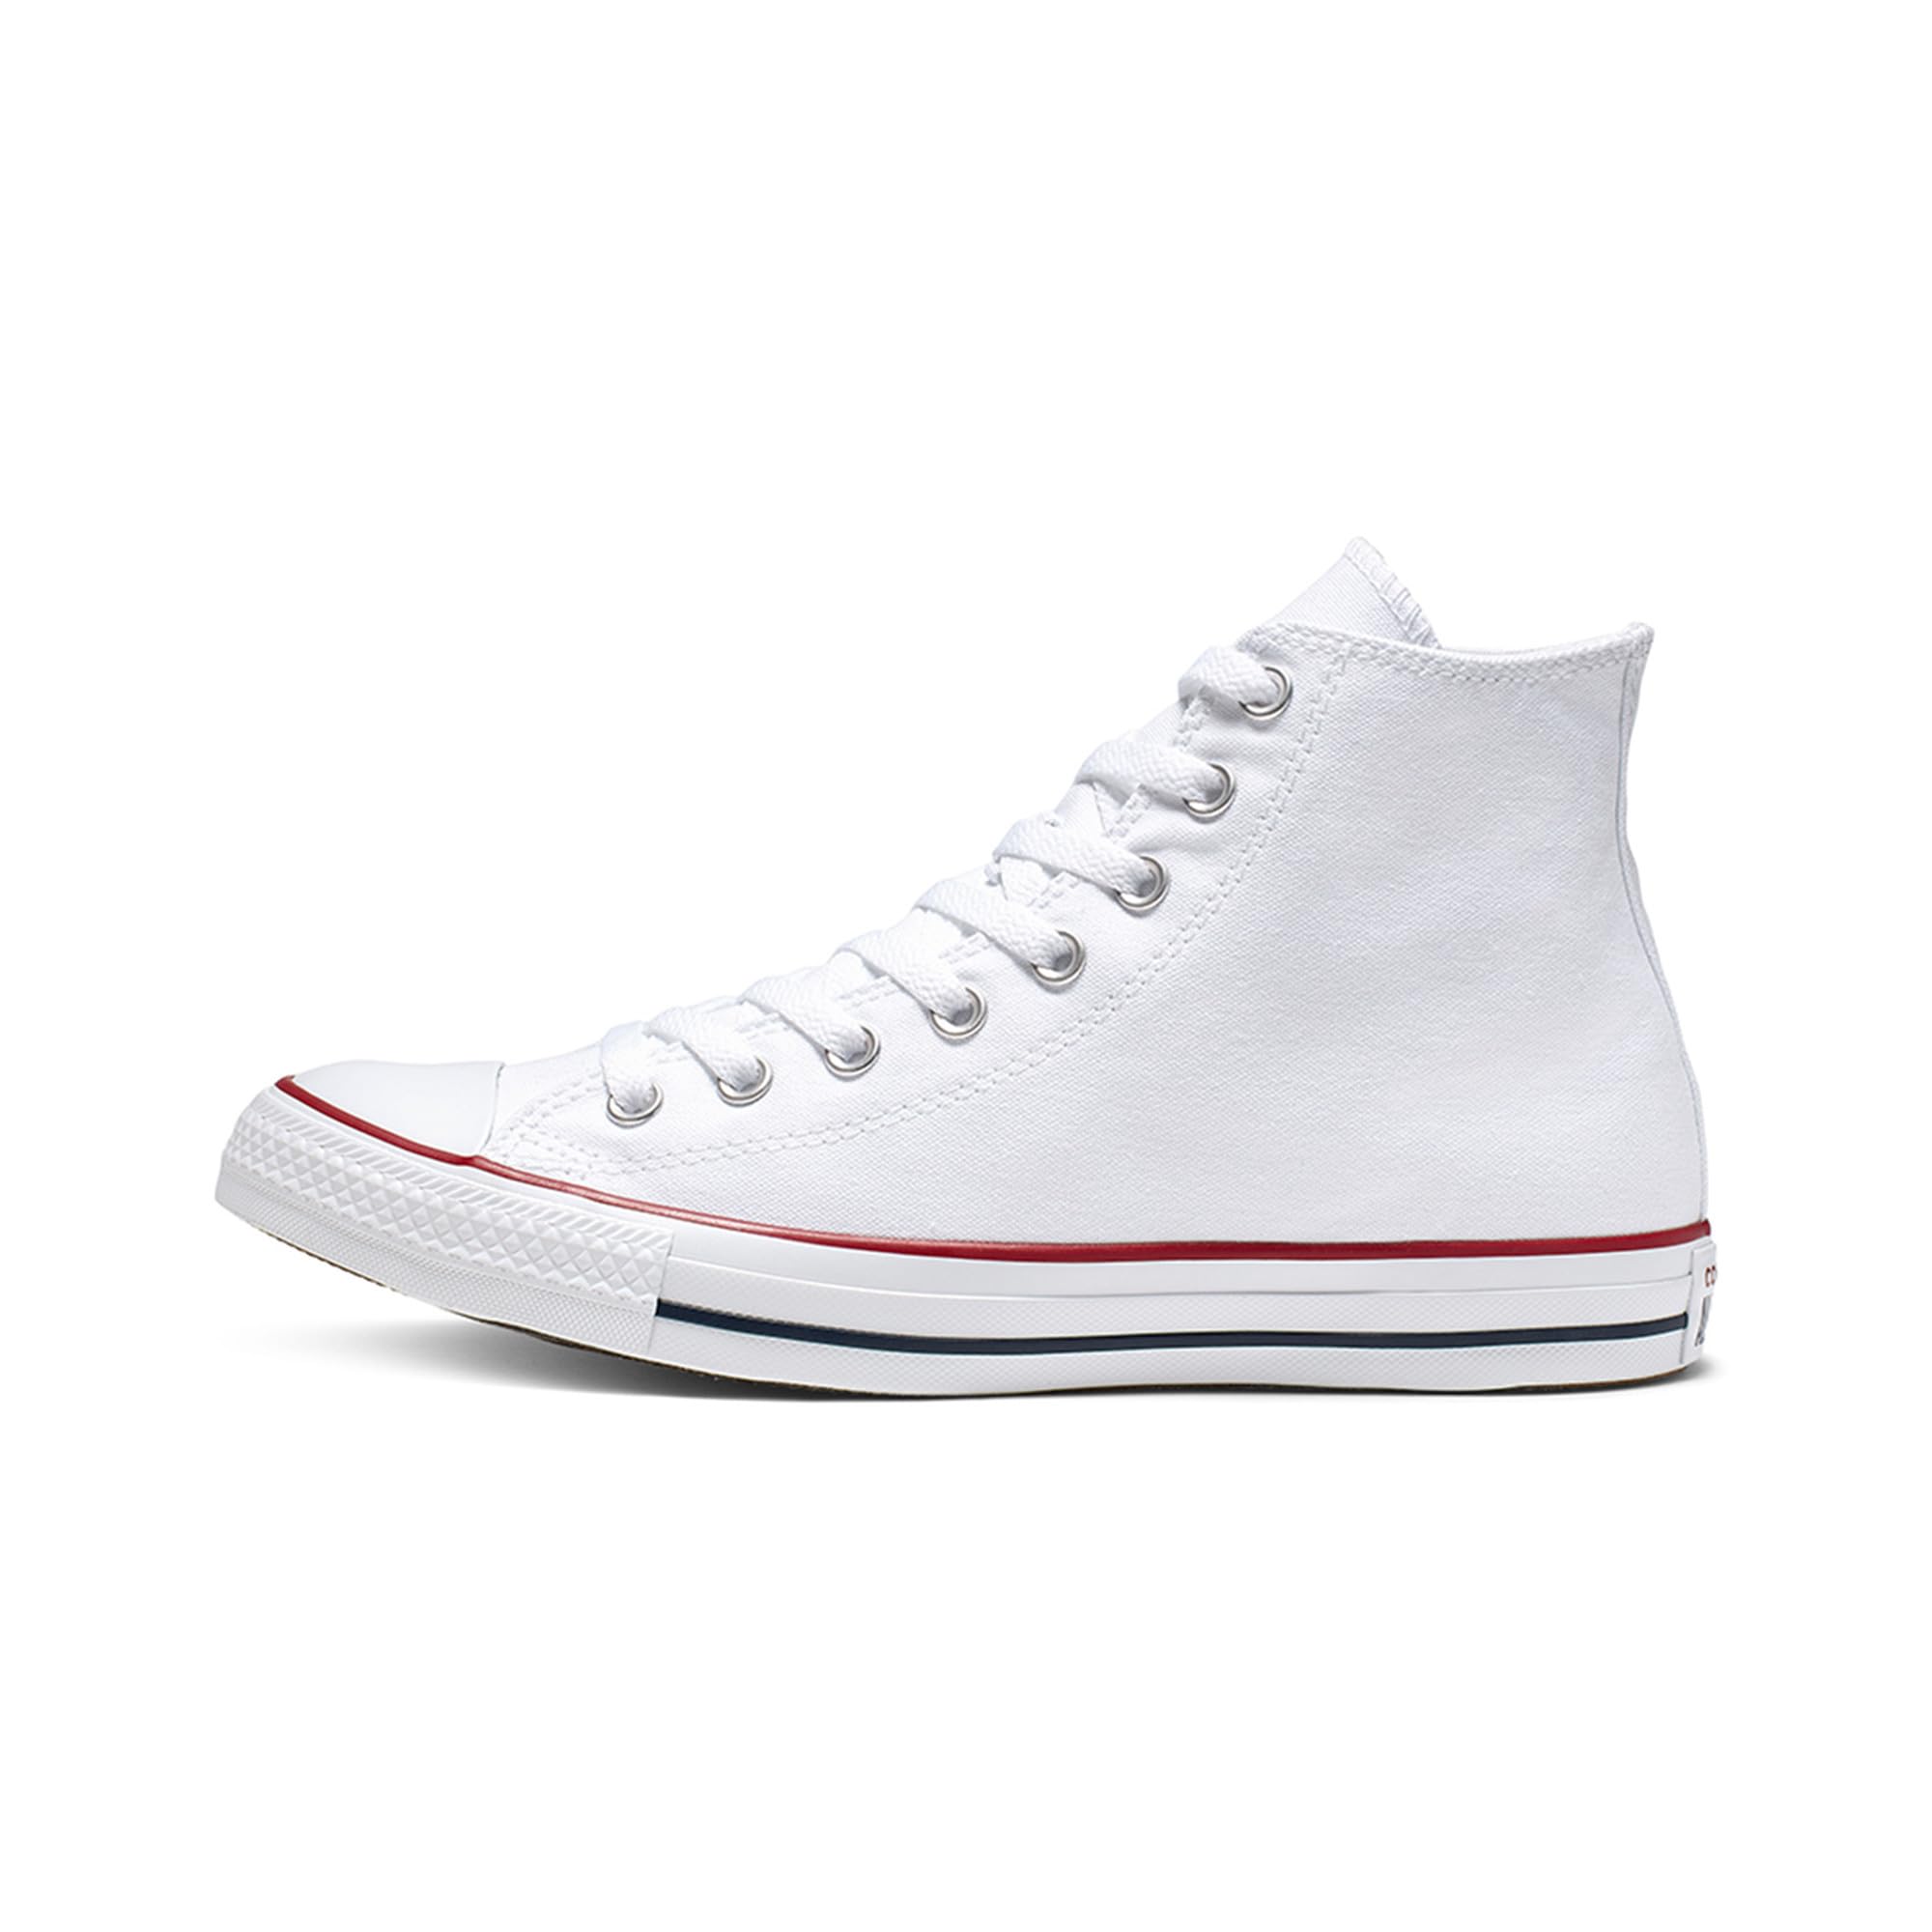 Converse All Star Hi Canvas Sneakers, Optical White, 45 EU